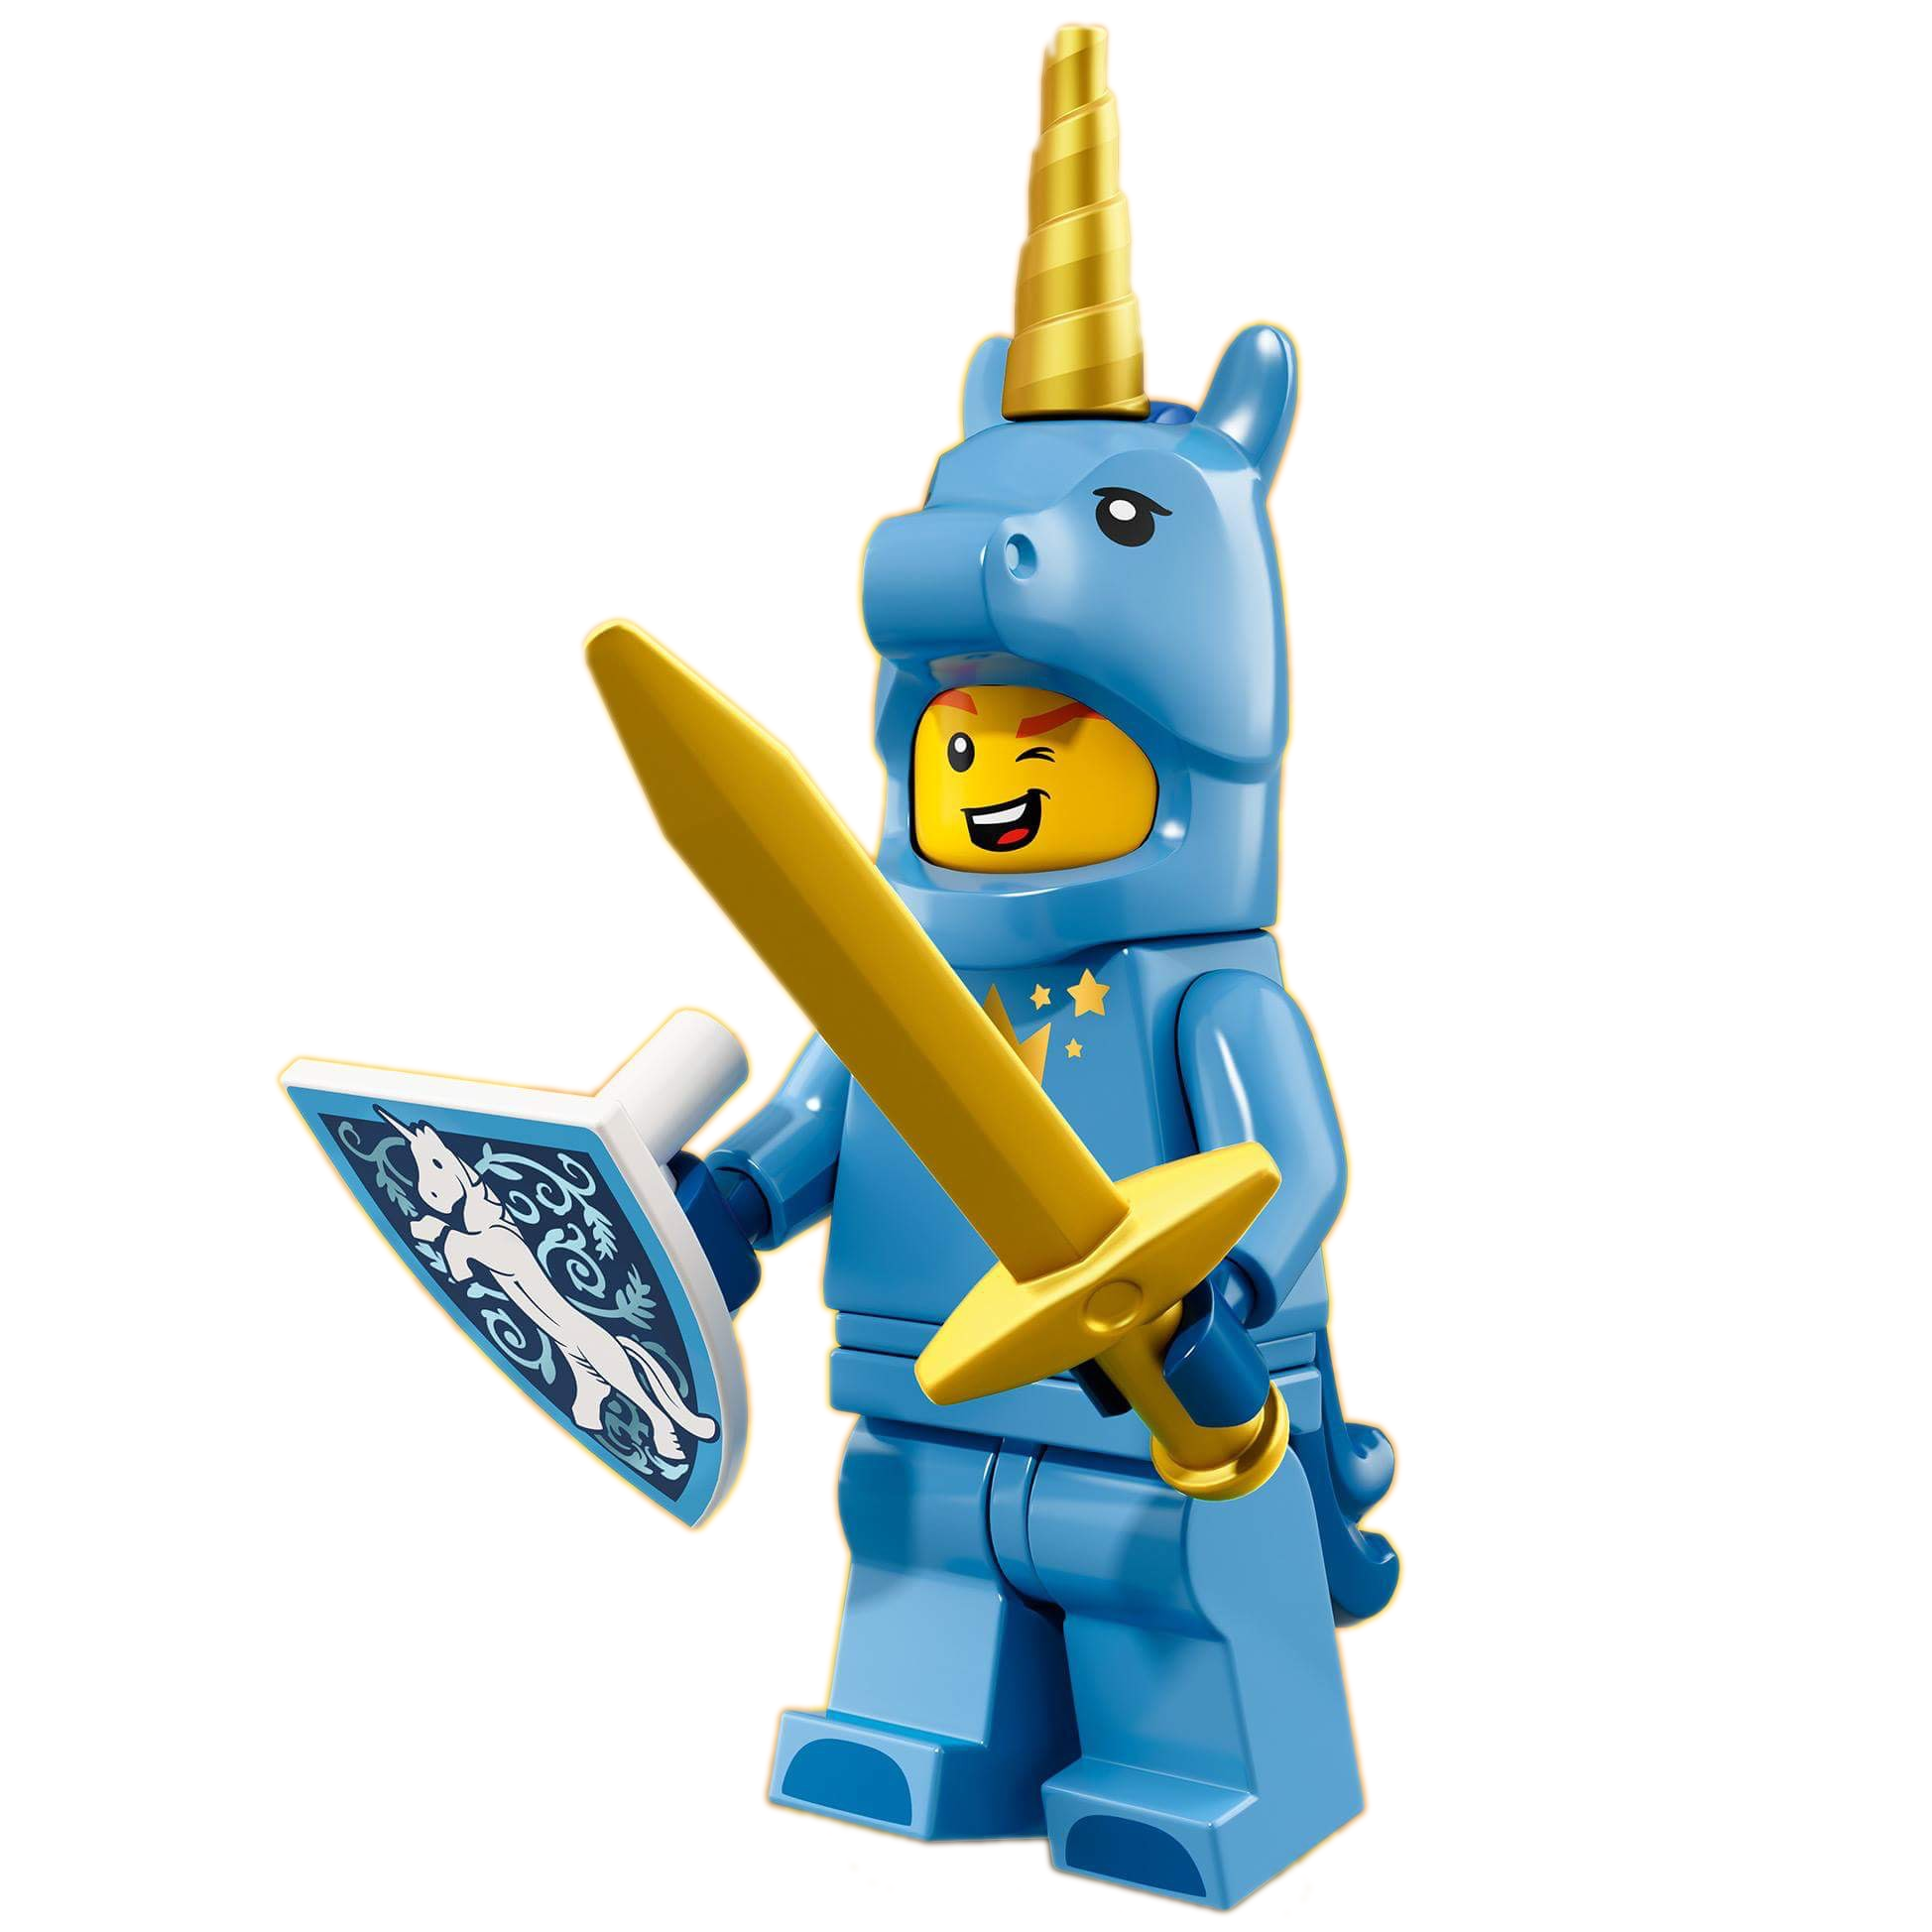 Lego New Unicorn Guy Series 18 Collectible Minifigure 71021